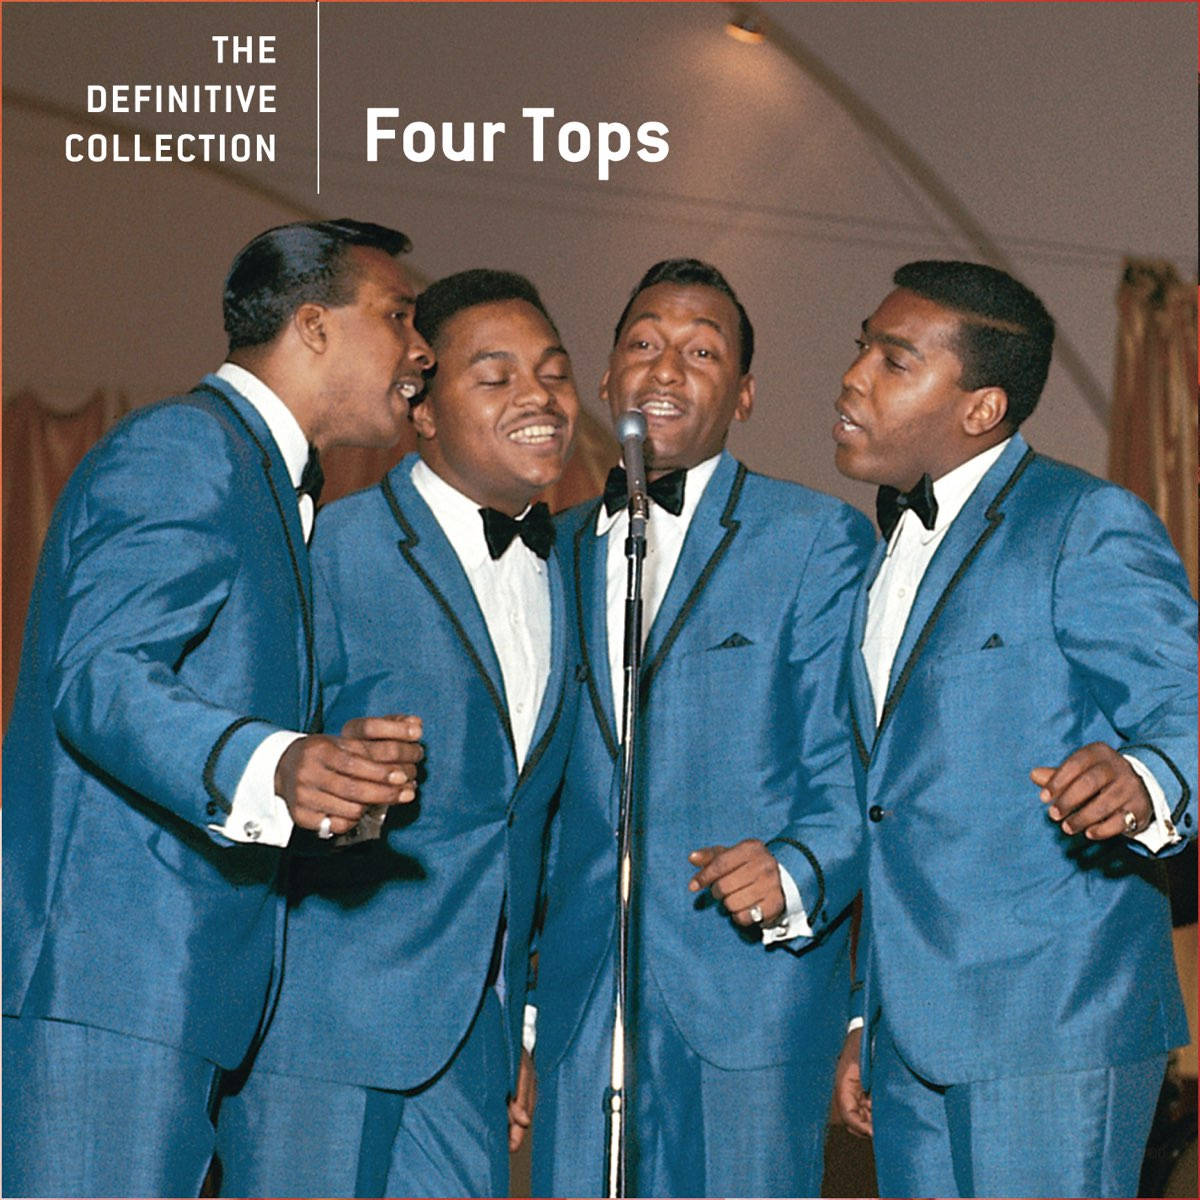 Amerikanischesvokalquartett Four Tops Das Ultimative Sammelalbum Cover Wallpaper